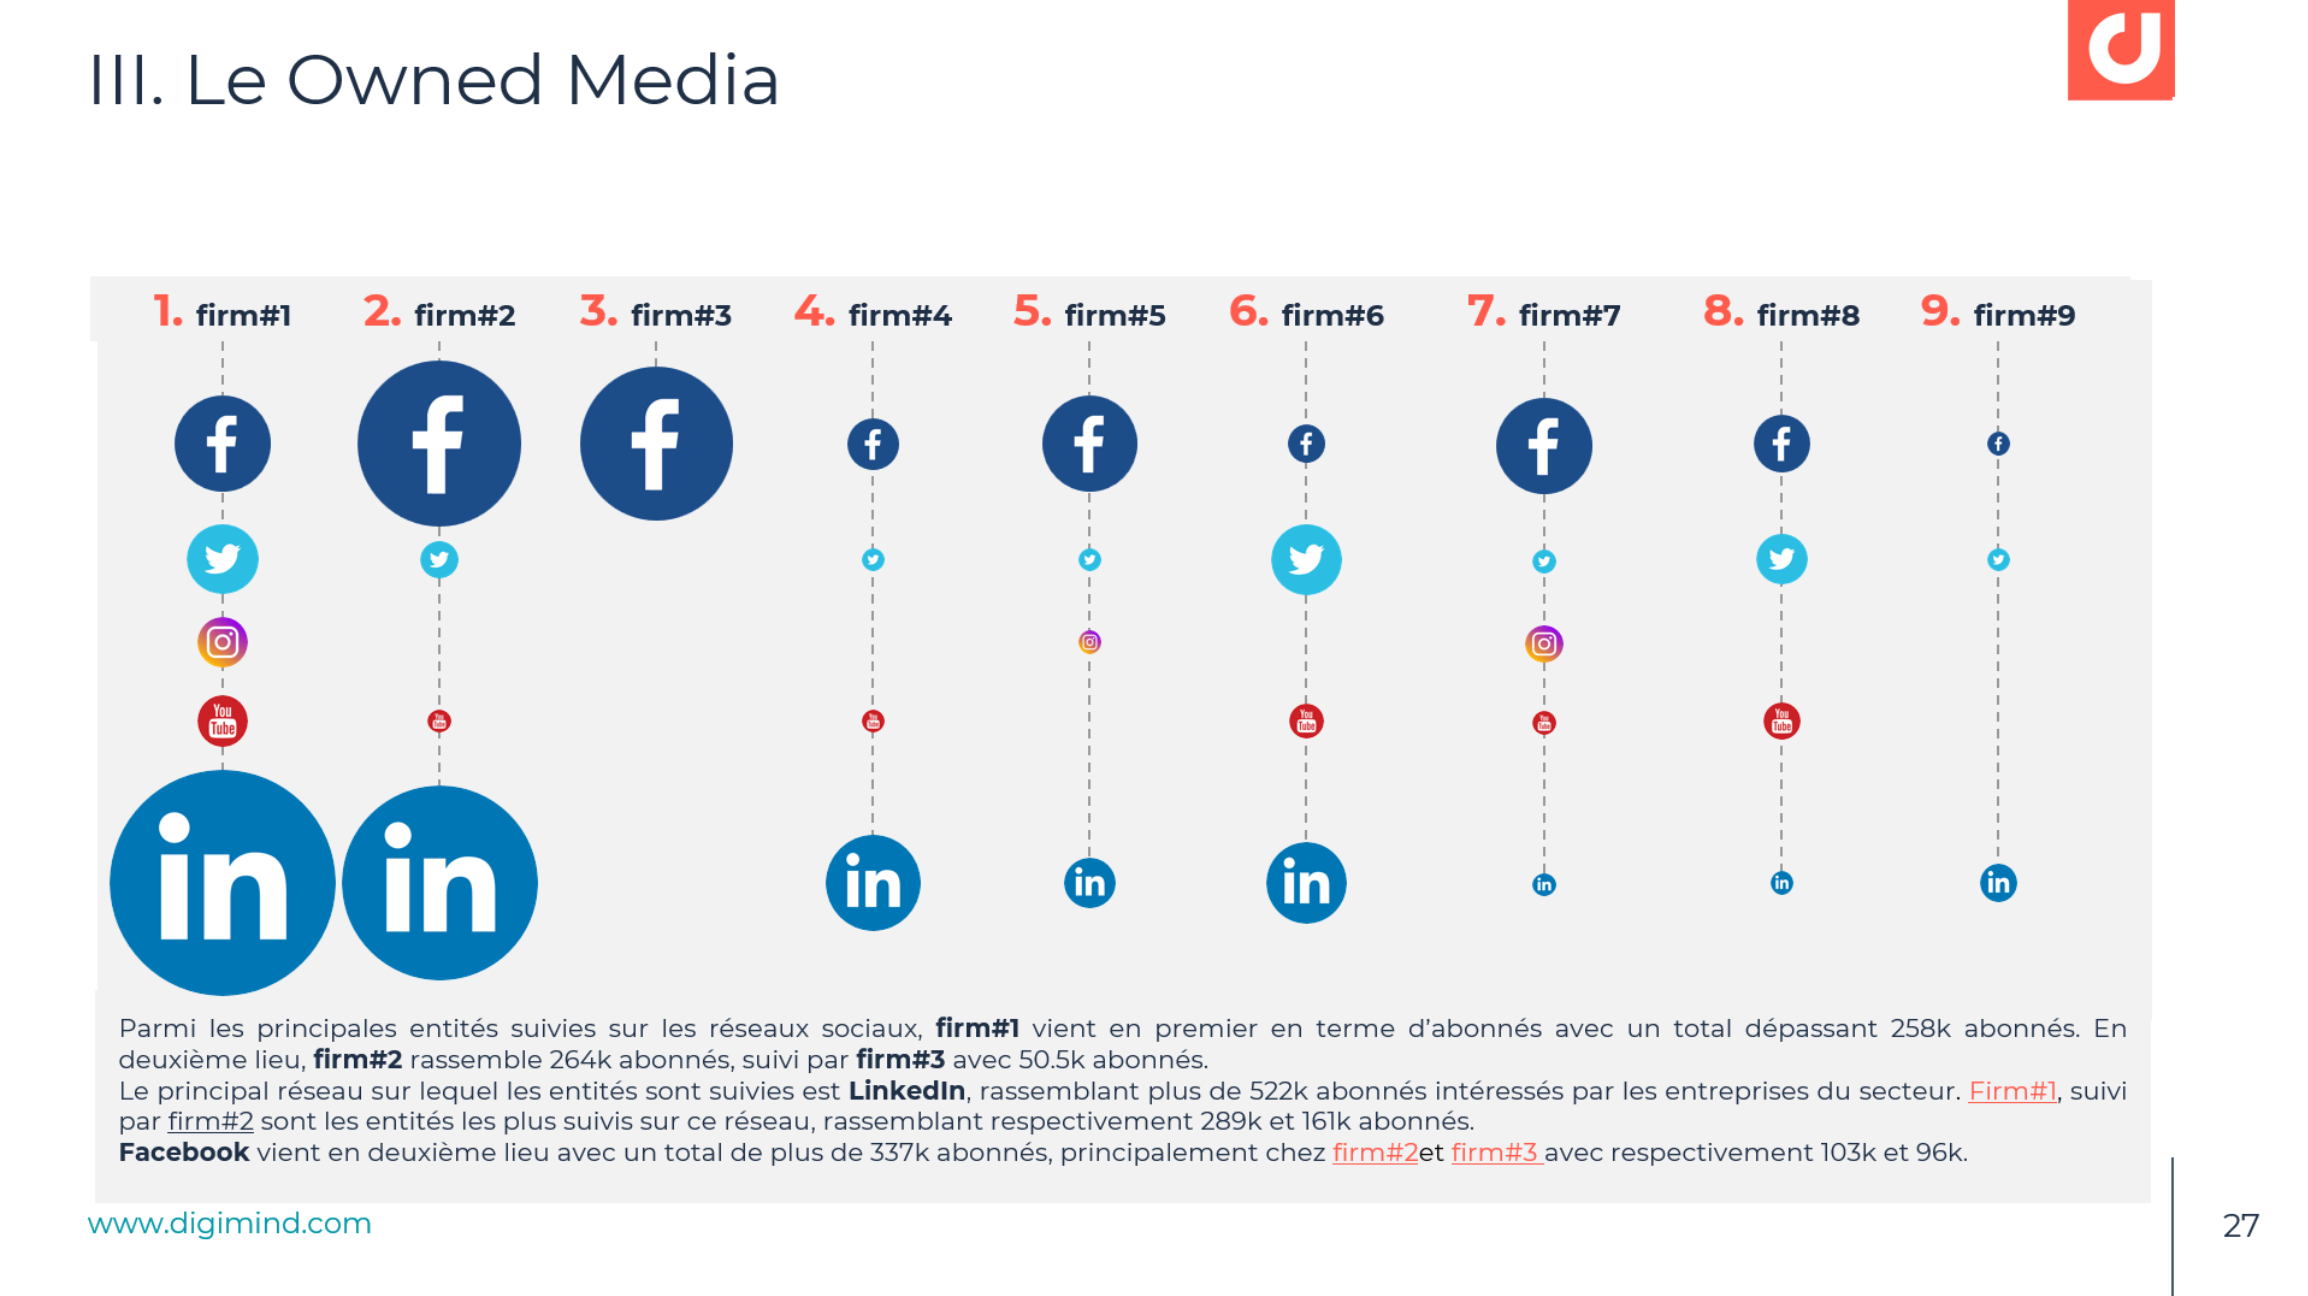 Une analyse du Owned Media d'un rapport d'analyse social media de marques